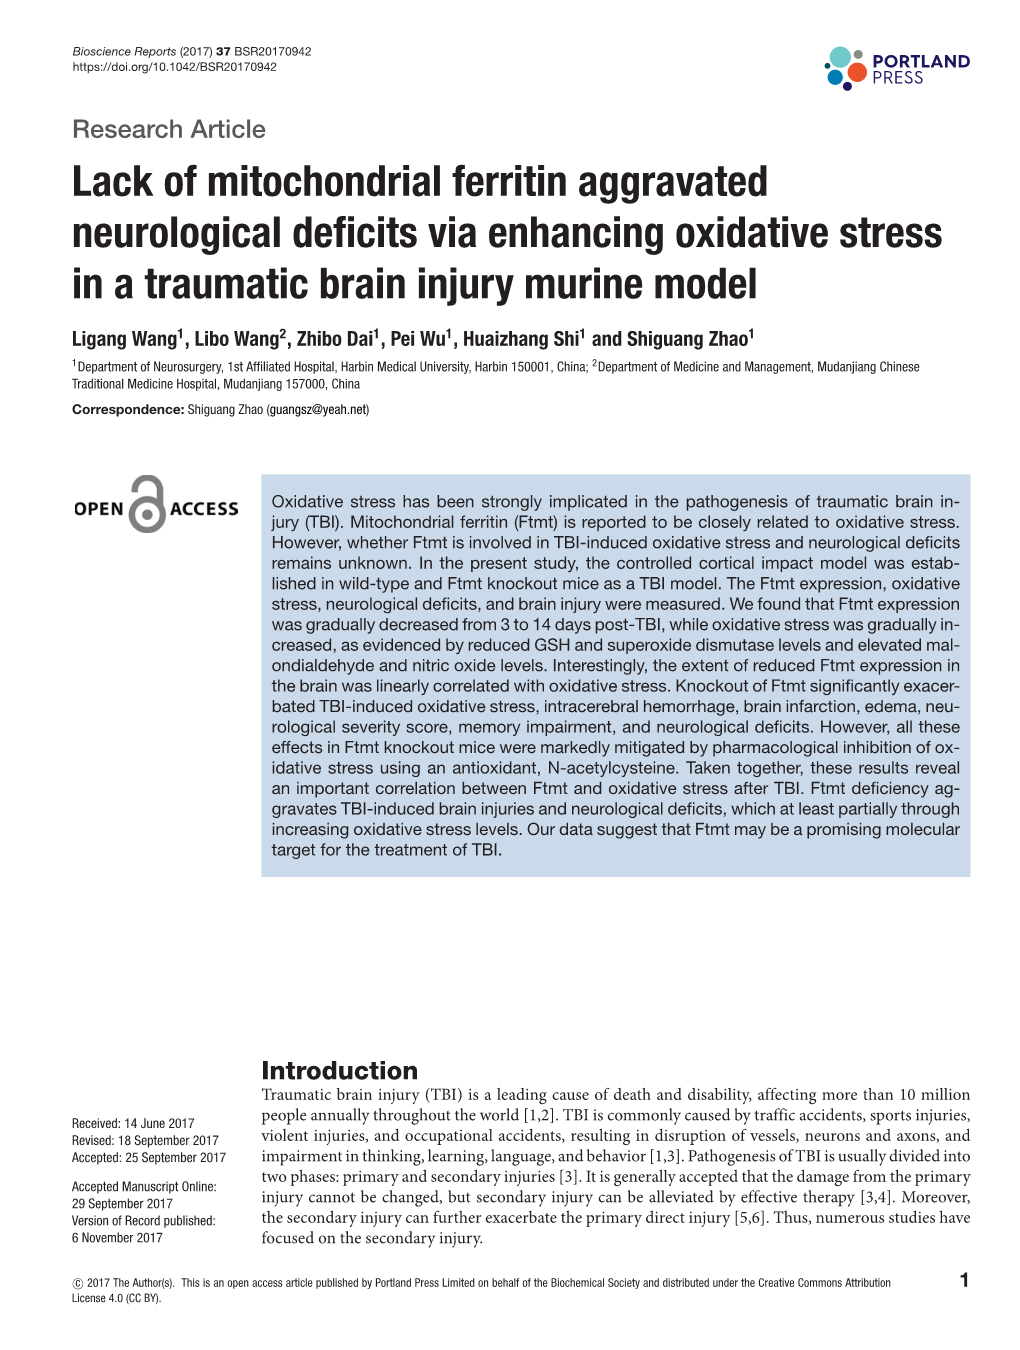 Lack of Mitochondrial Ferritin Aggravated Neurological Deficits Via Enhancing Oxidative Stress in a Traumatic Brain Injury Murin